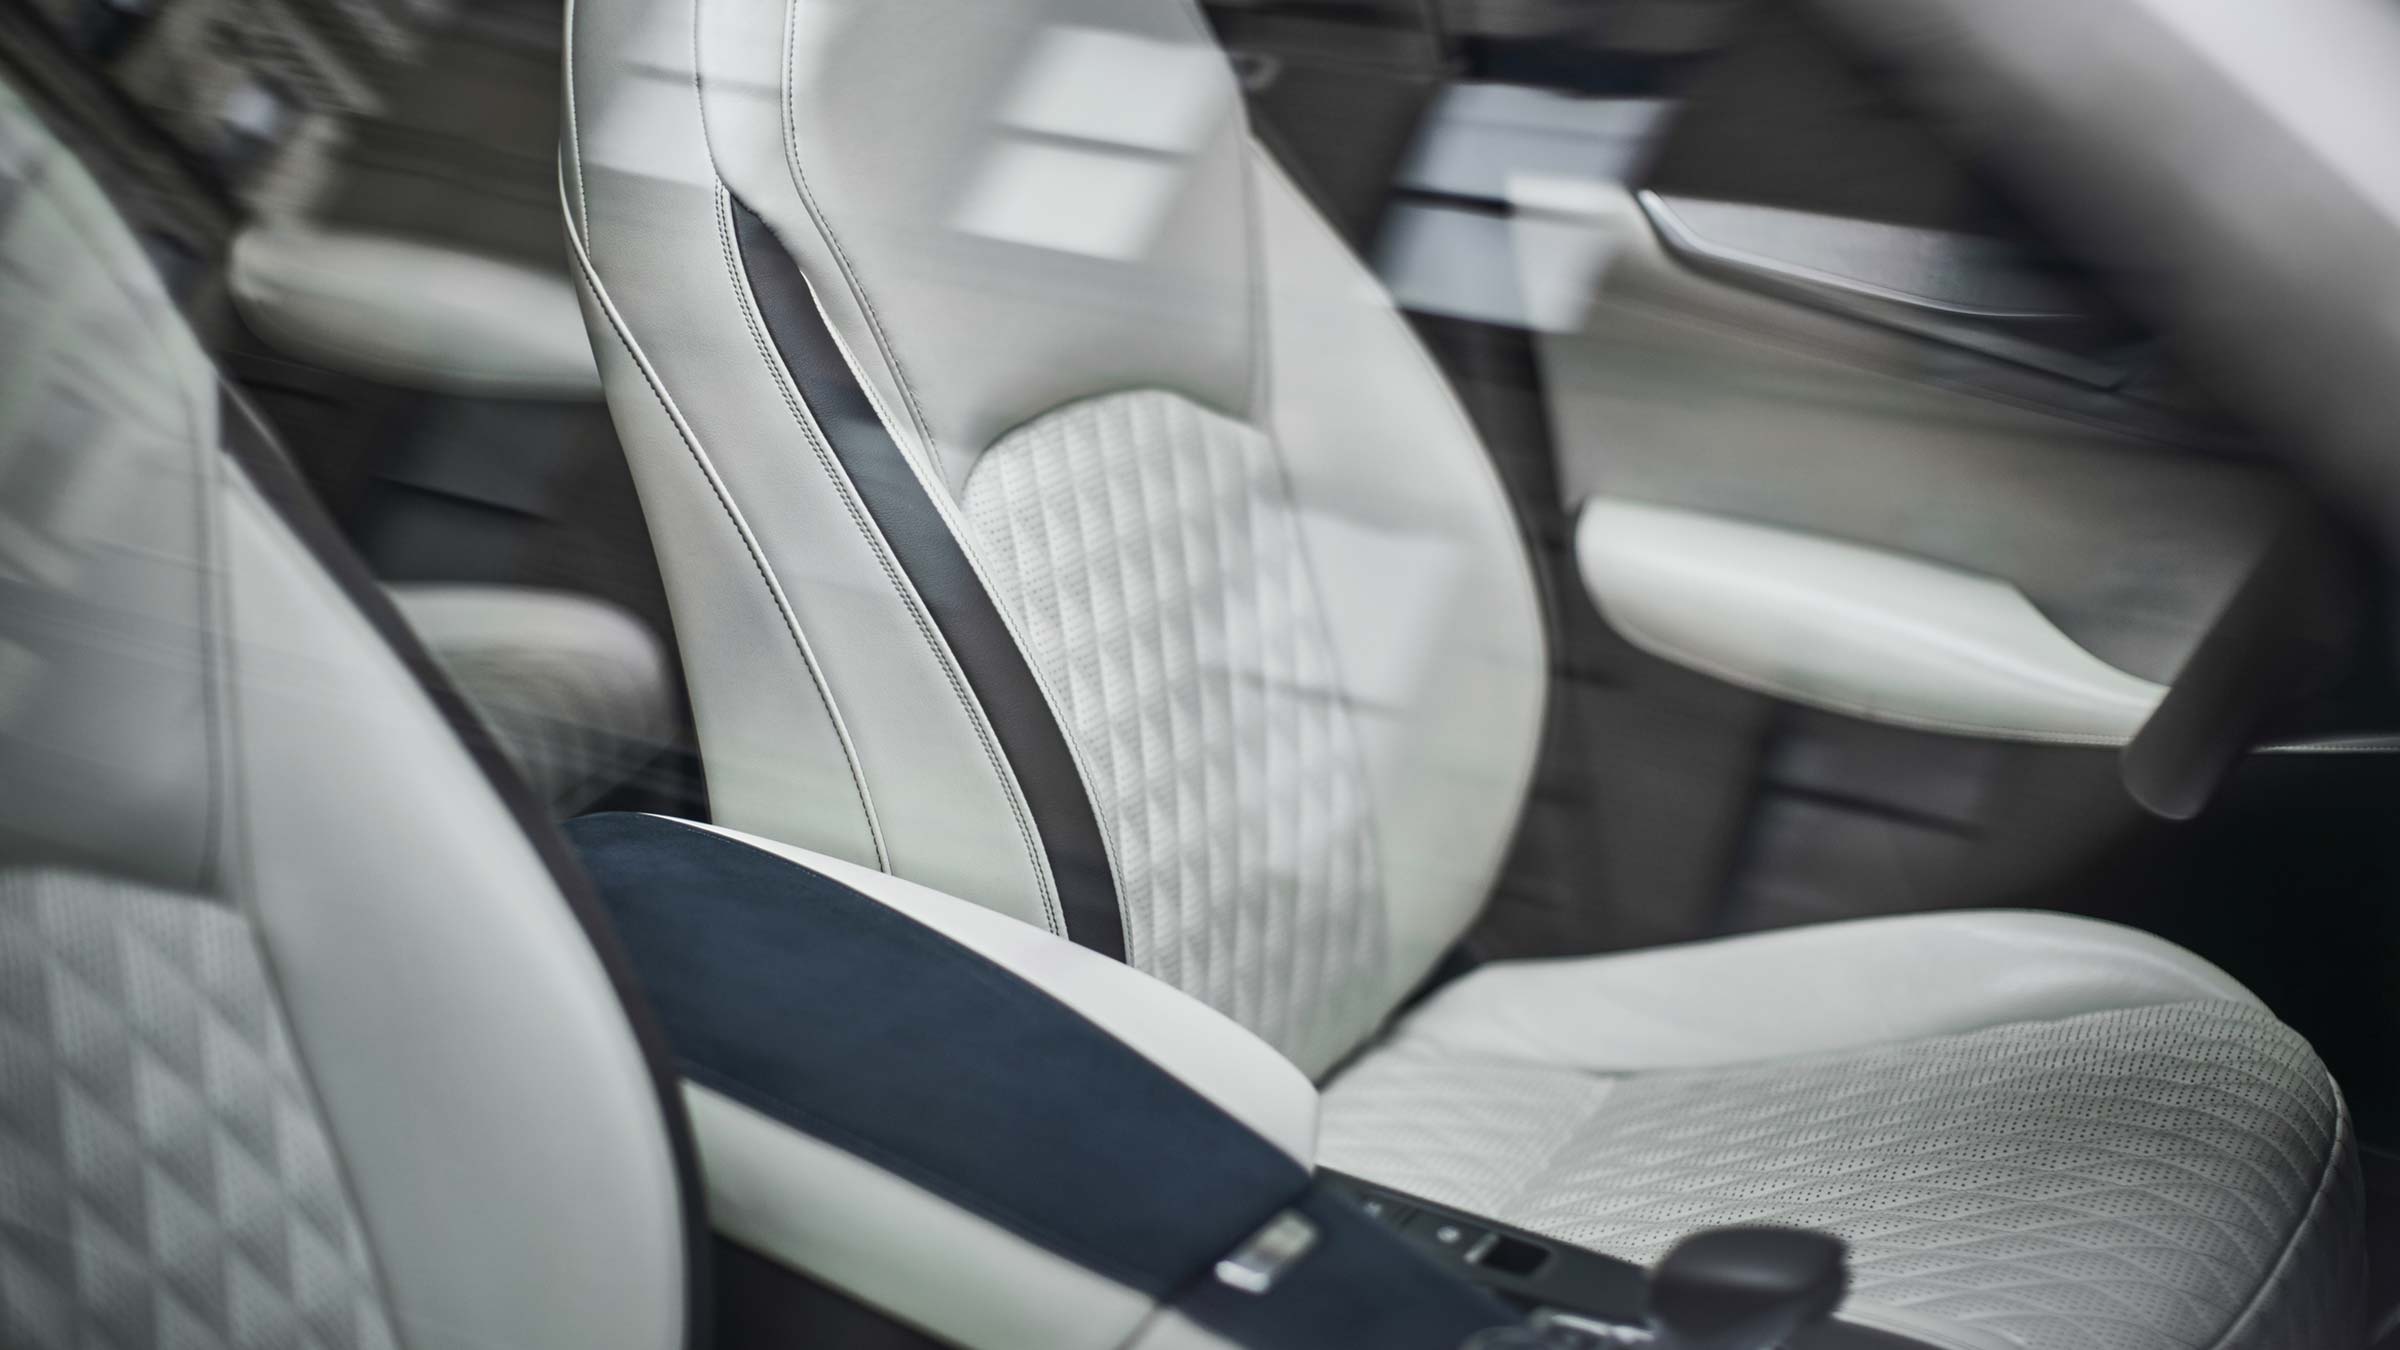 2022 INFINITI QX50 SUV leather seats.